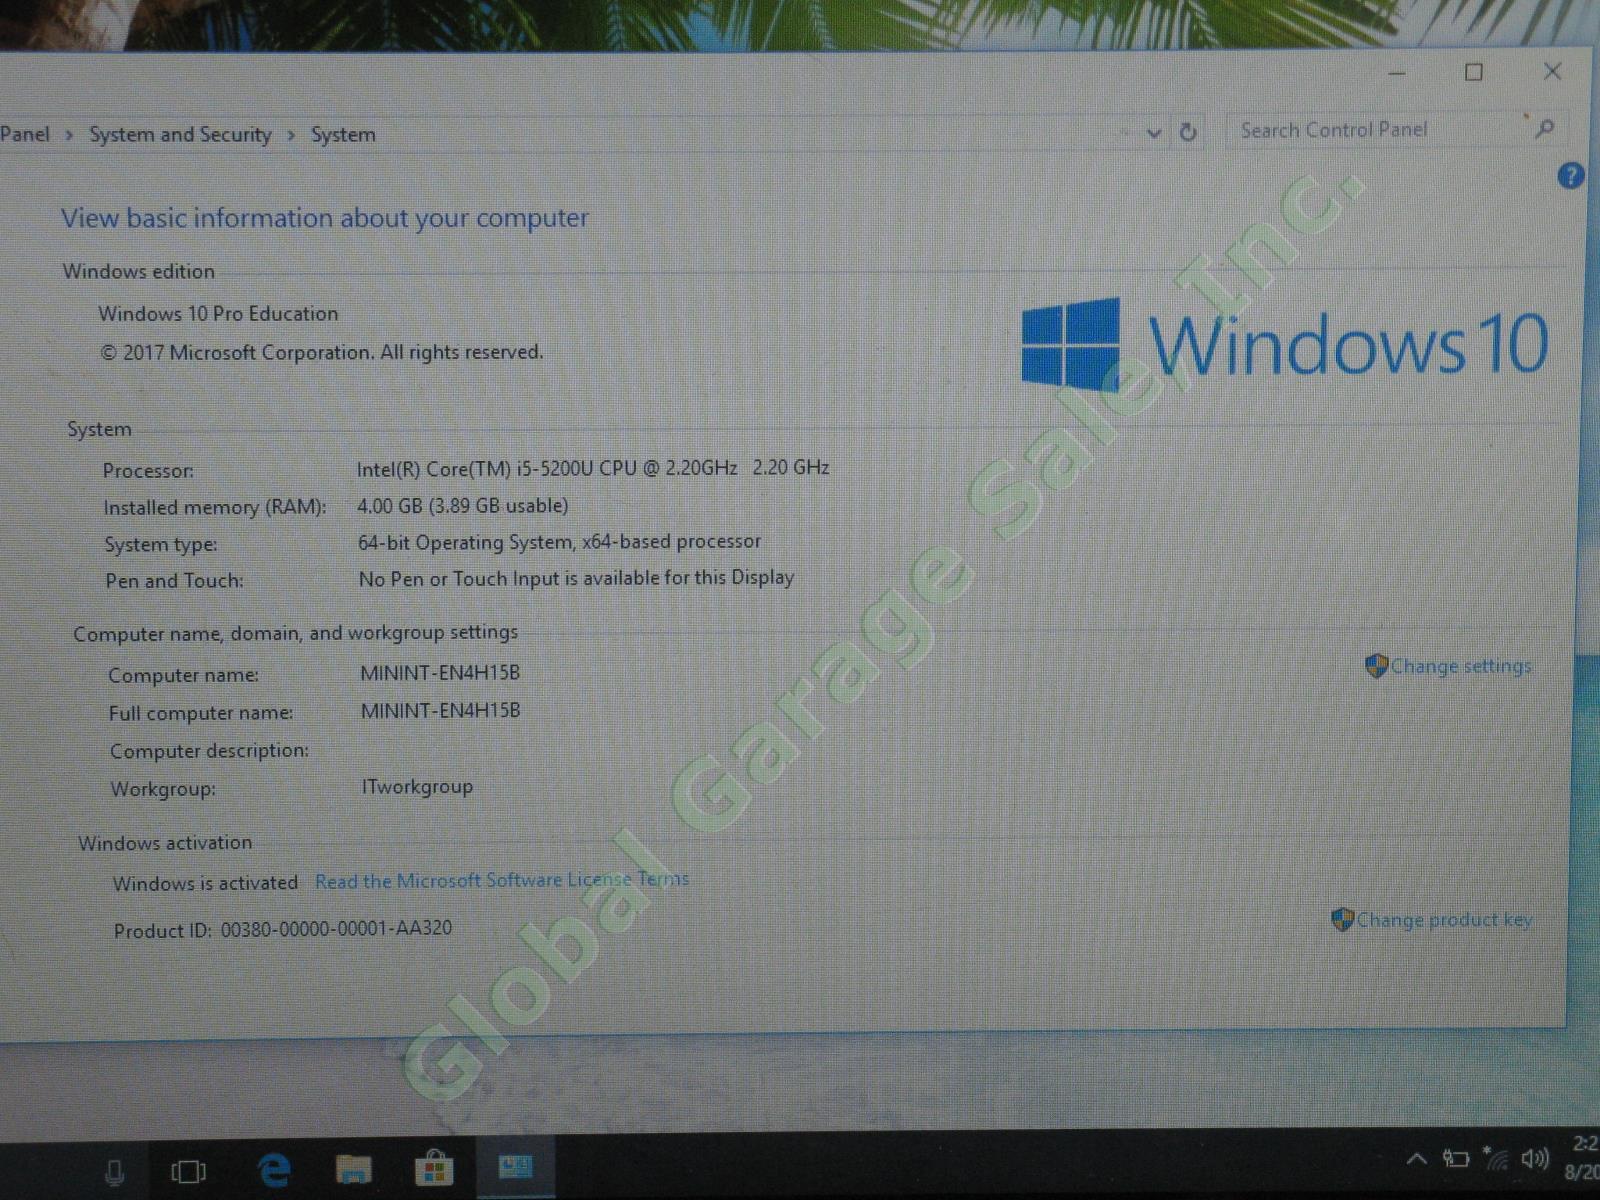 HP ProBook Laptop 440 G2 i5-5200U 2.20GHz 4GB RAM 460GB HD Windows 10 Pro Refurb 2